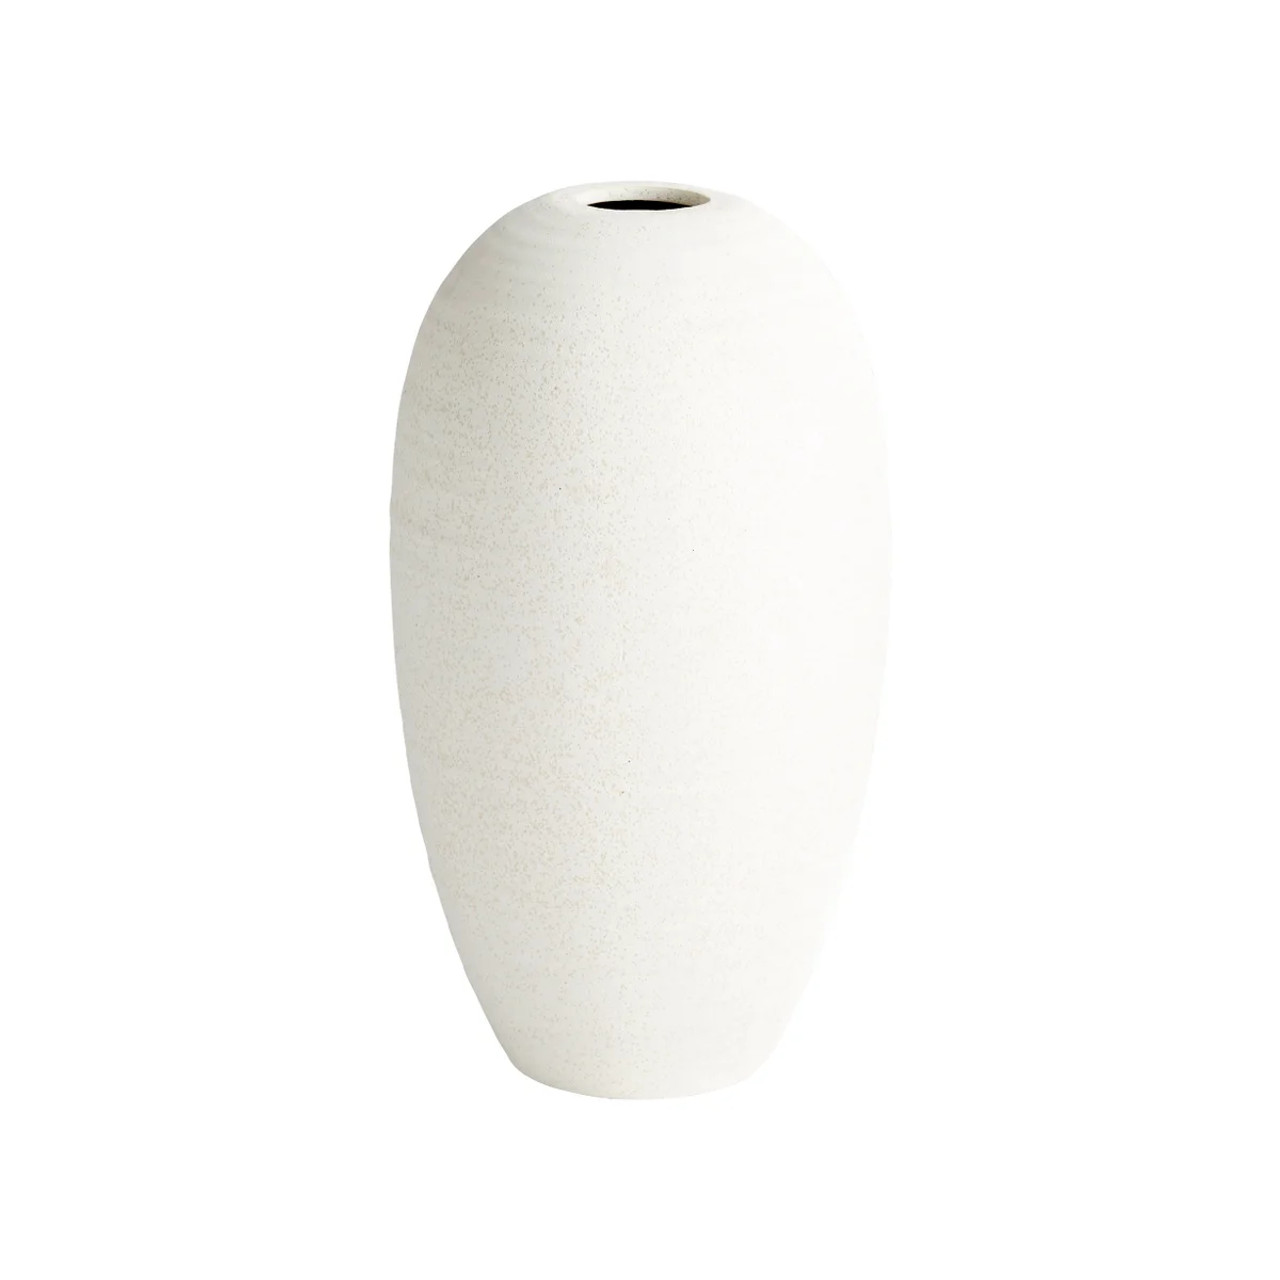 CYAN DESIGN 11201 Medium Perennial Vase